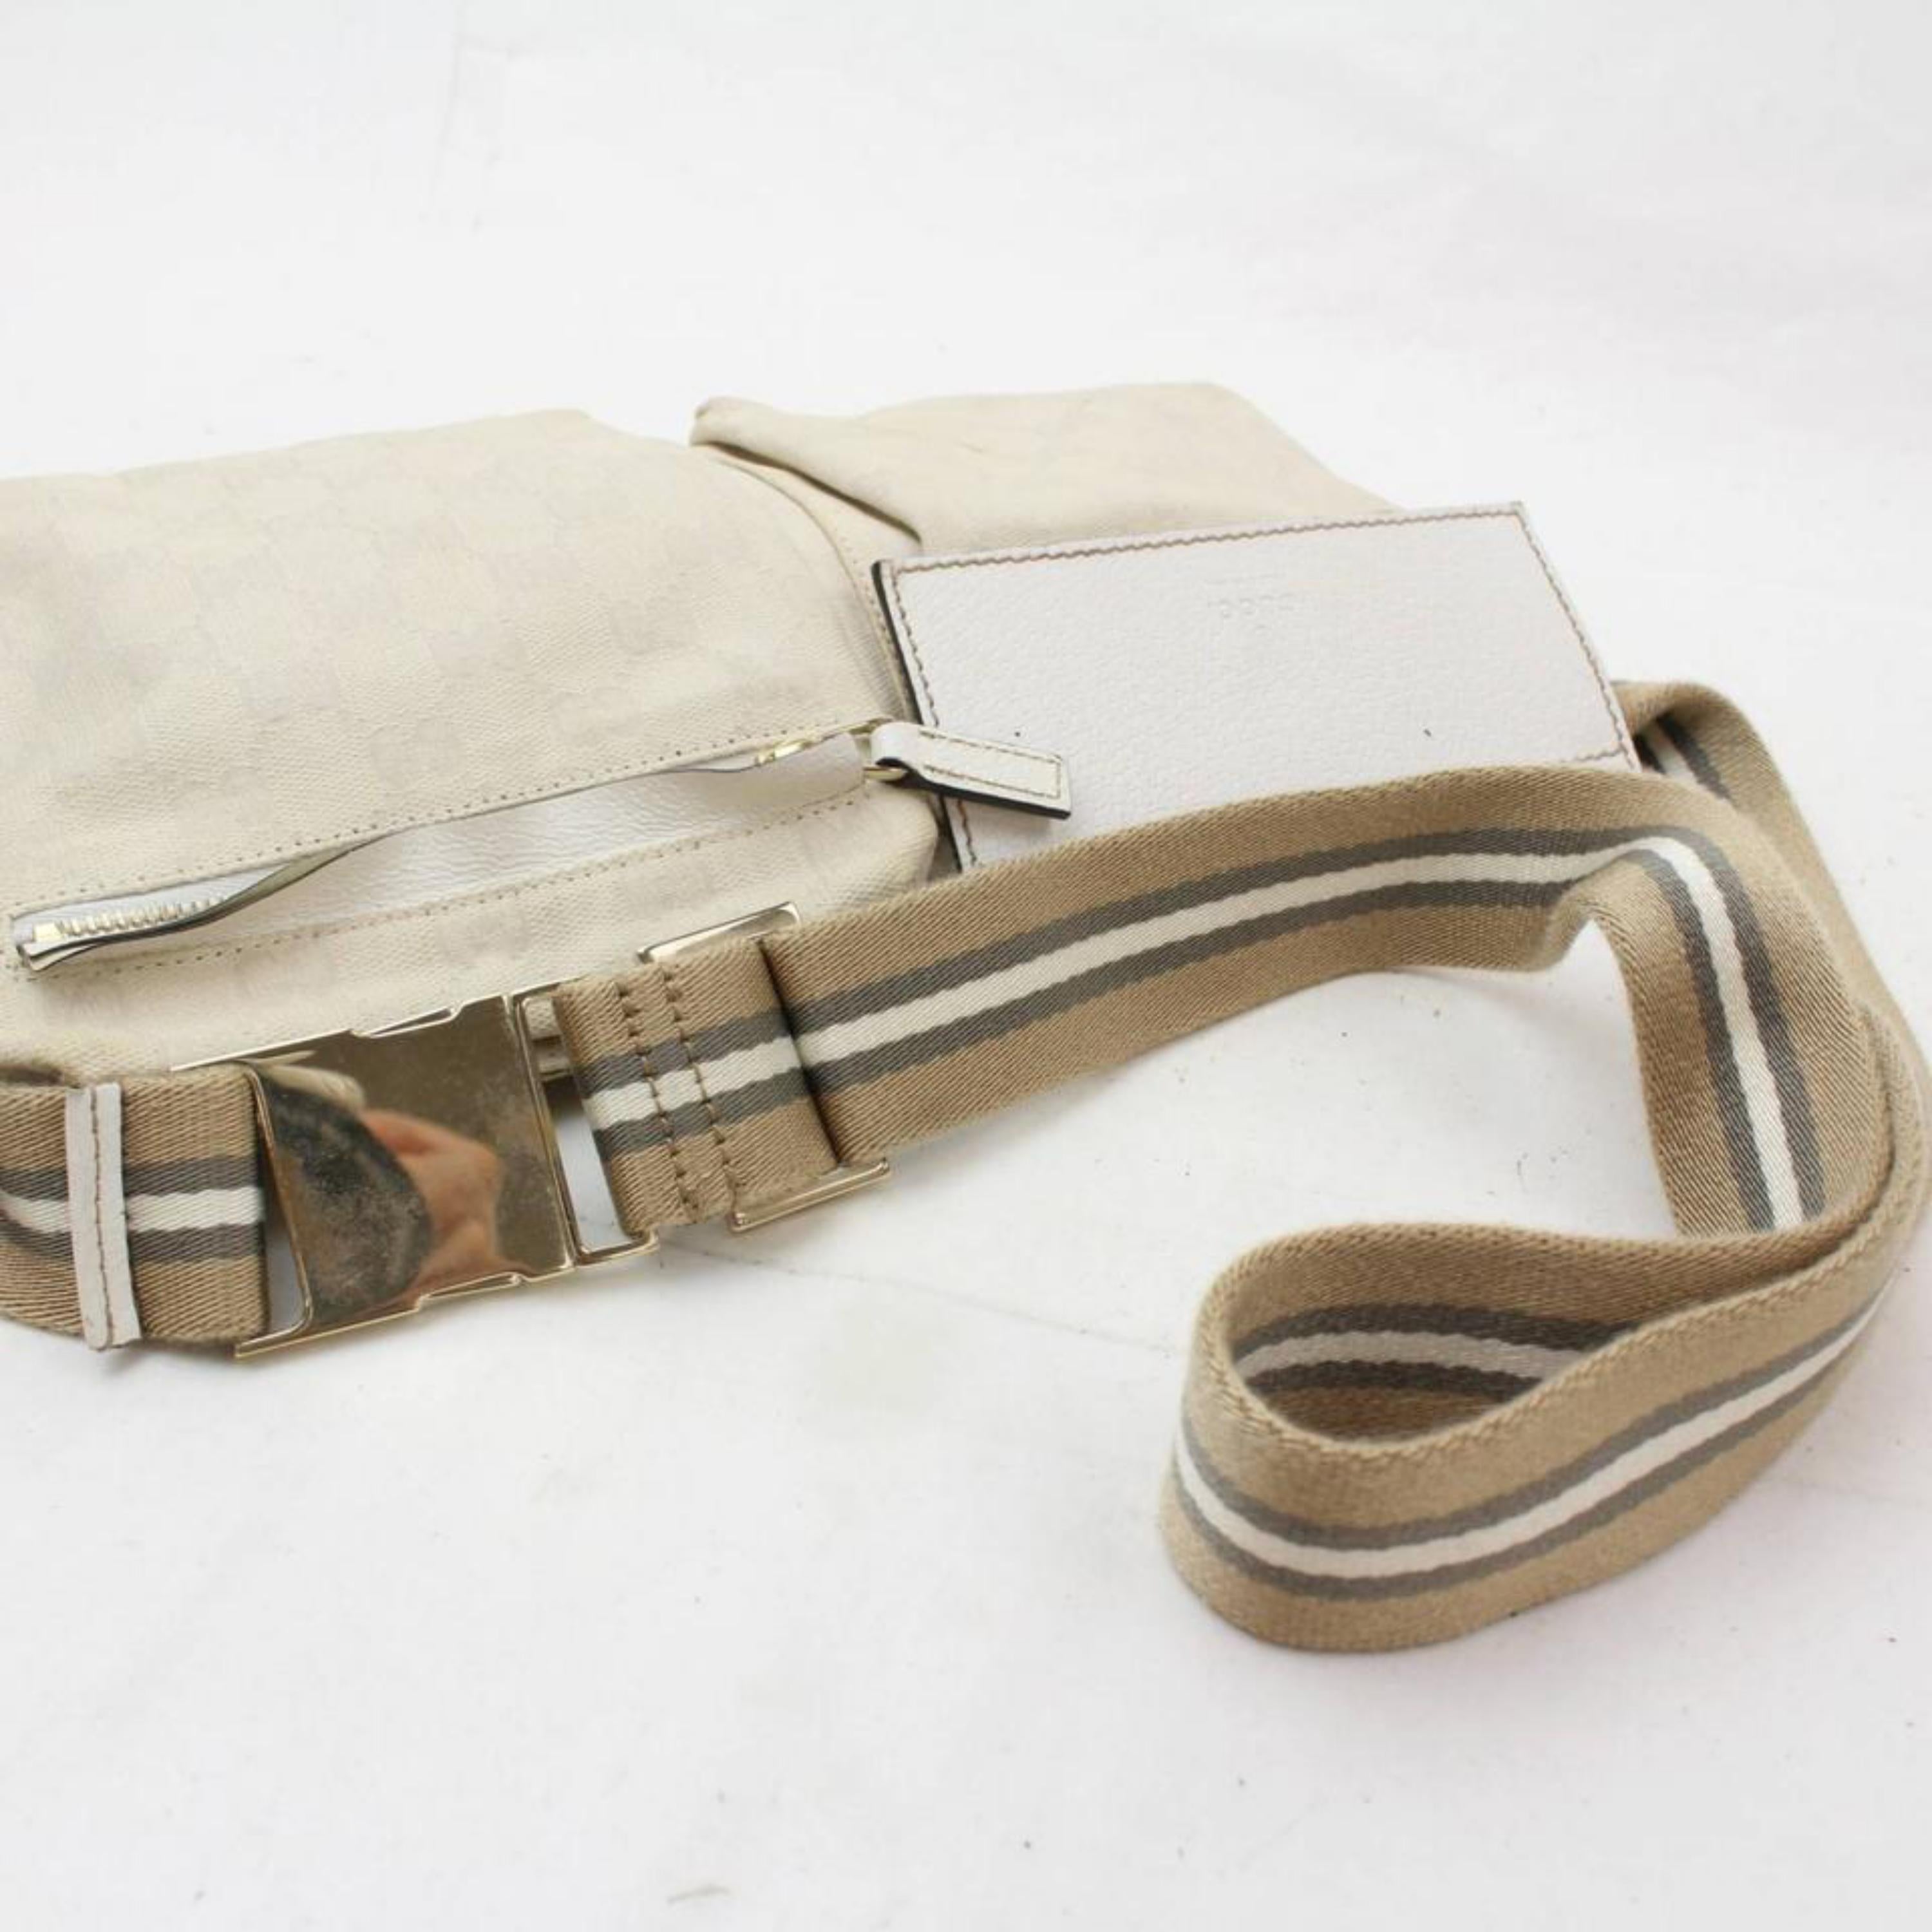 white gucci belt bag